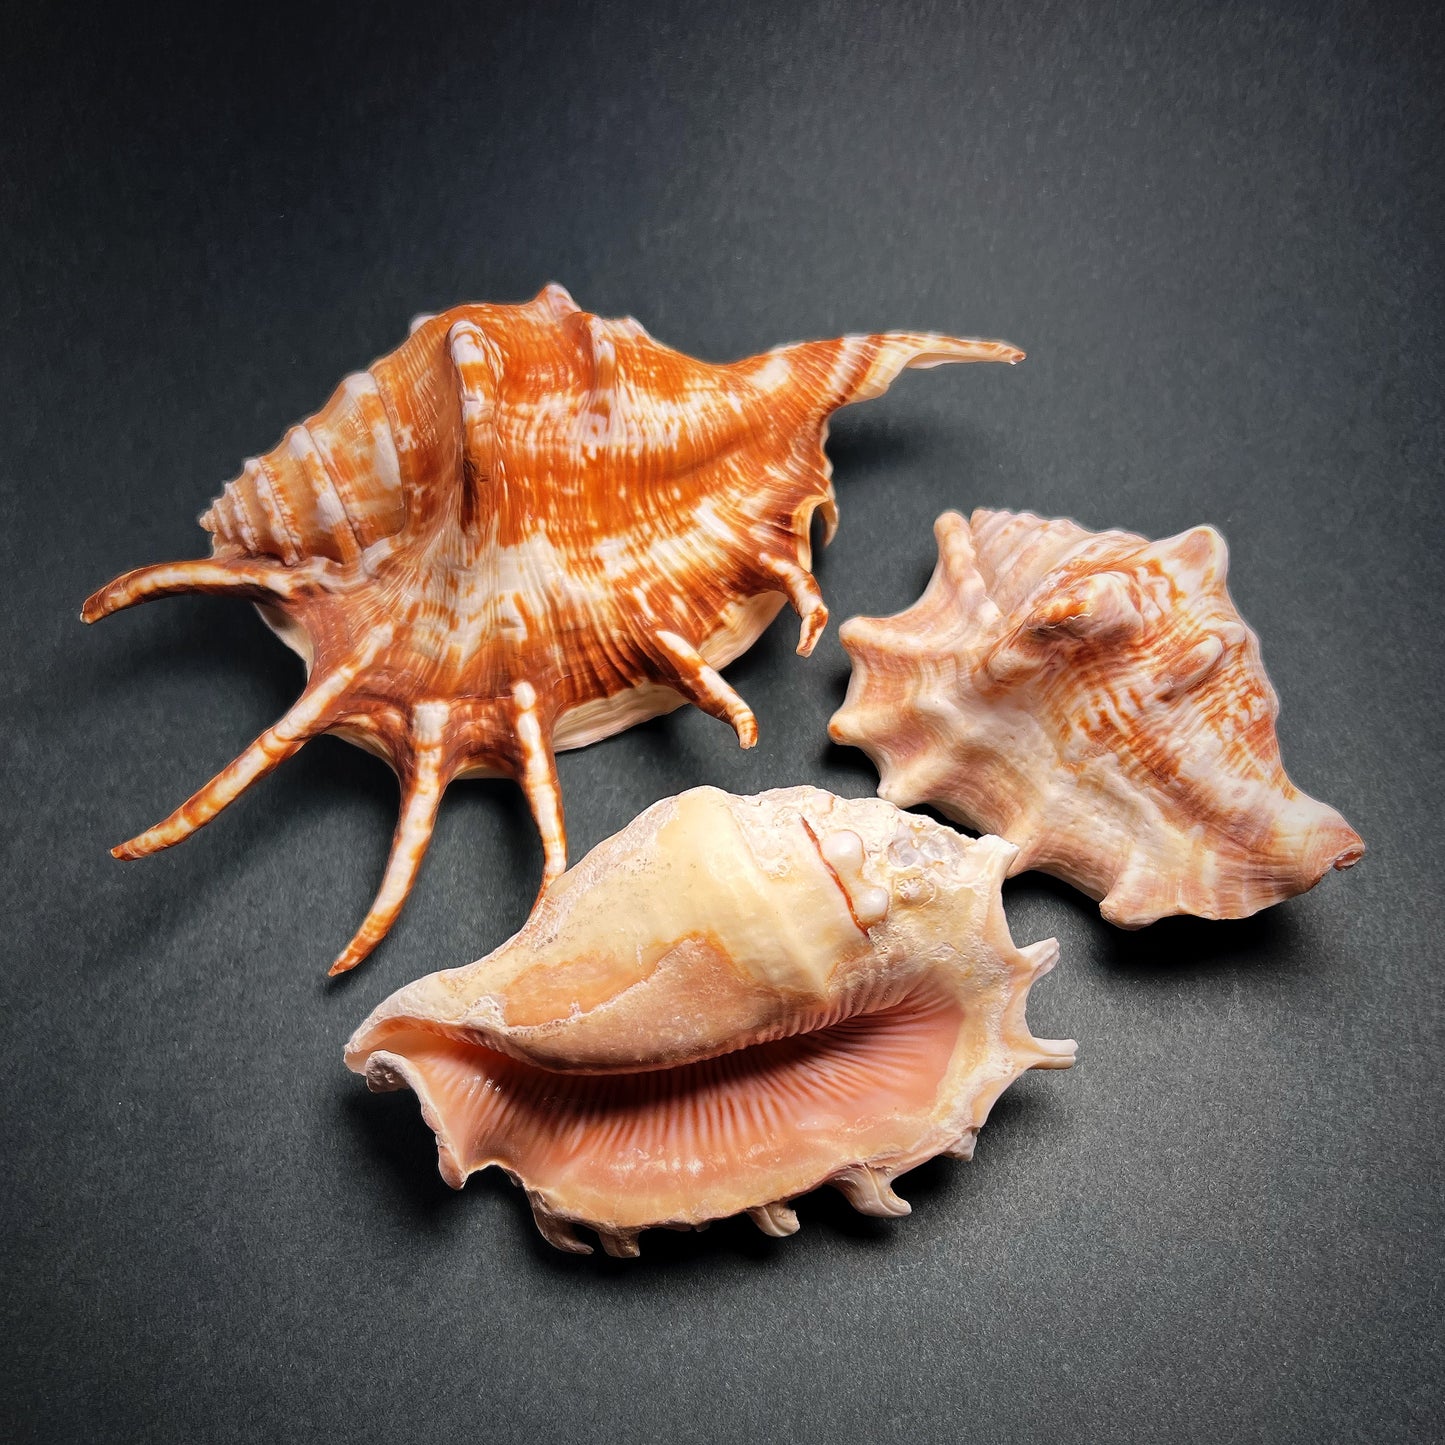 Conch shell - Lambis lambis, M size 